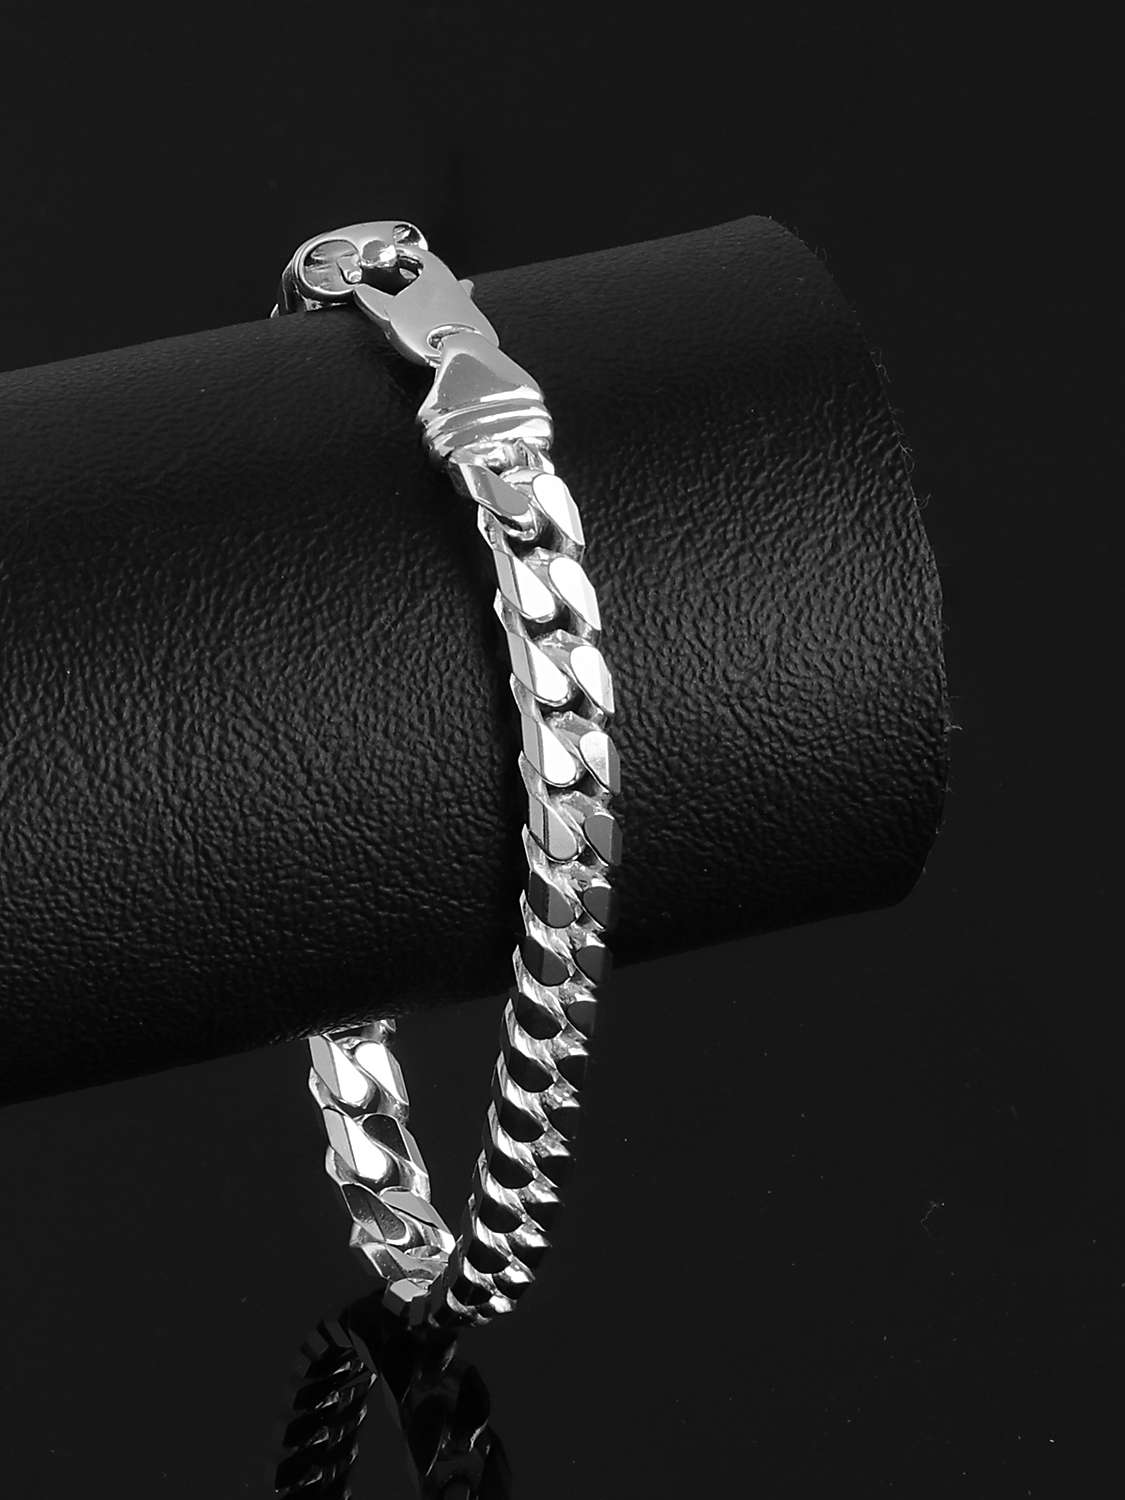 Buy Nina B Men's Sterling Silver Heavy Curb Chain Bracelet, Silver Online at johnlewis.com